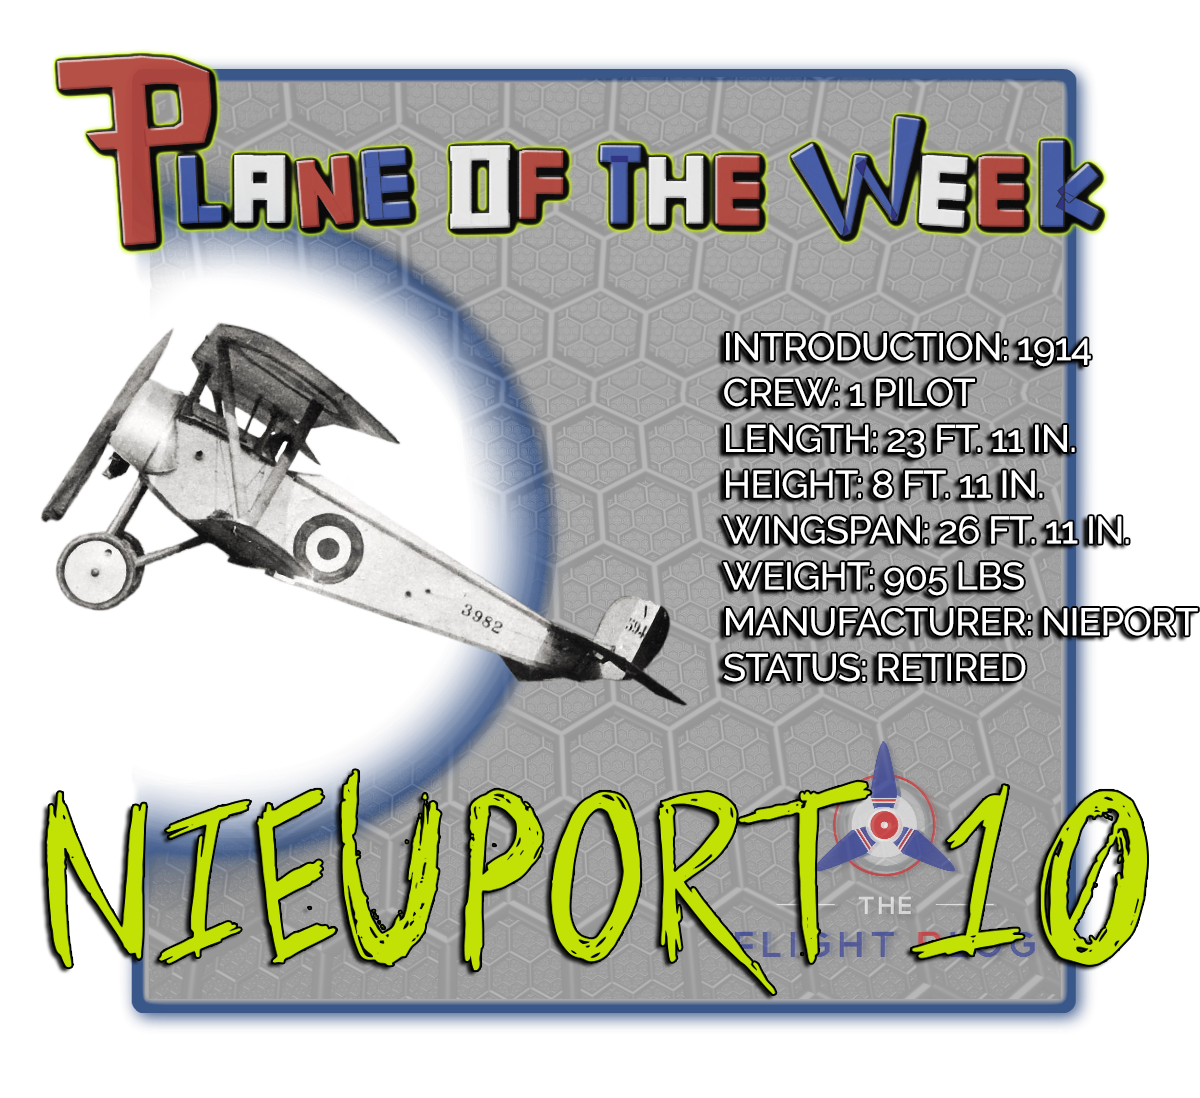 plane of the week, the flight blog, nieuport 10, wwI aircraft, reconnaissance plane